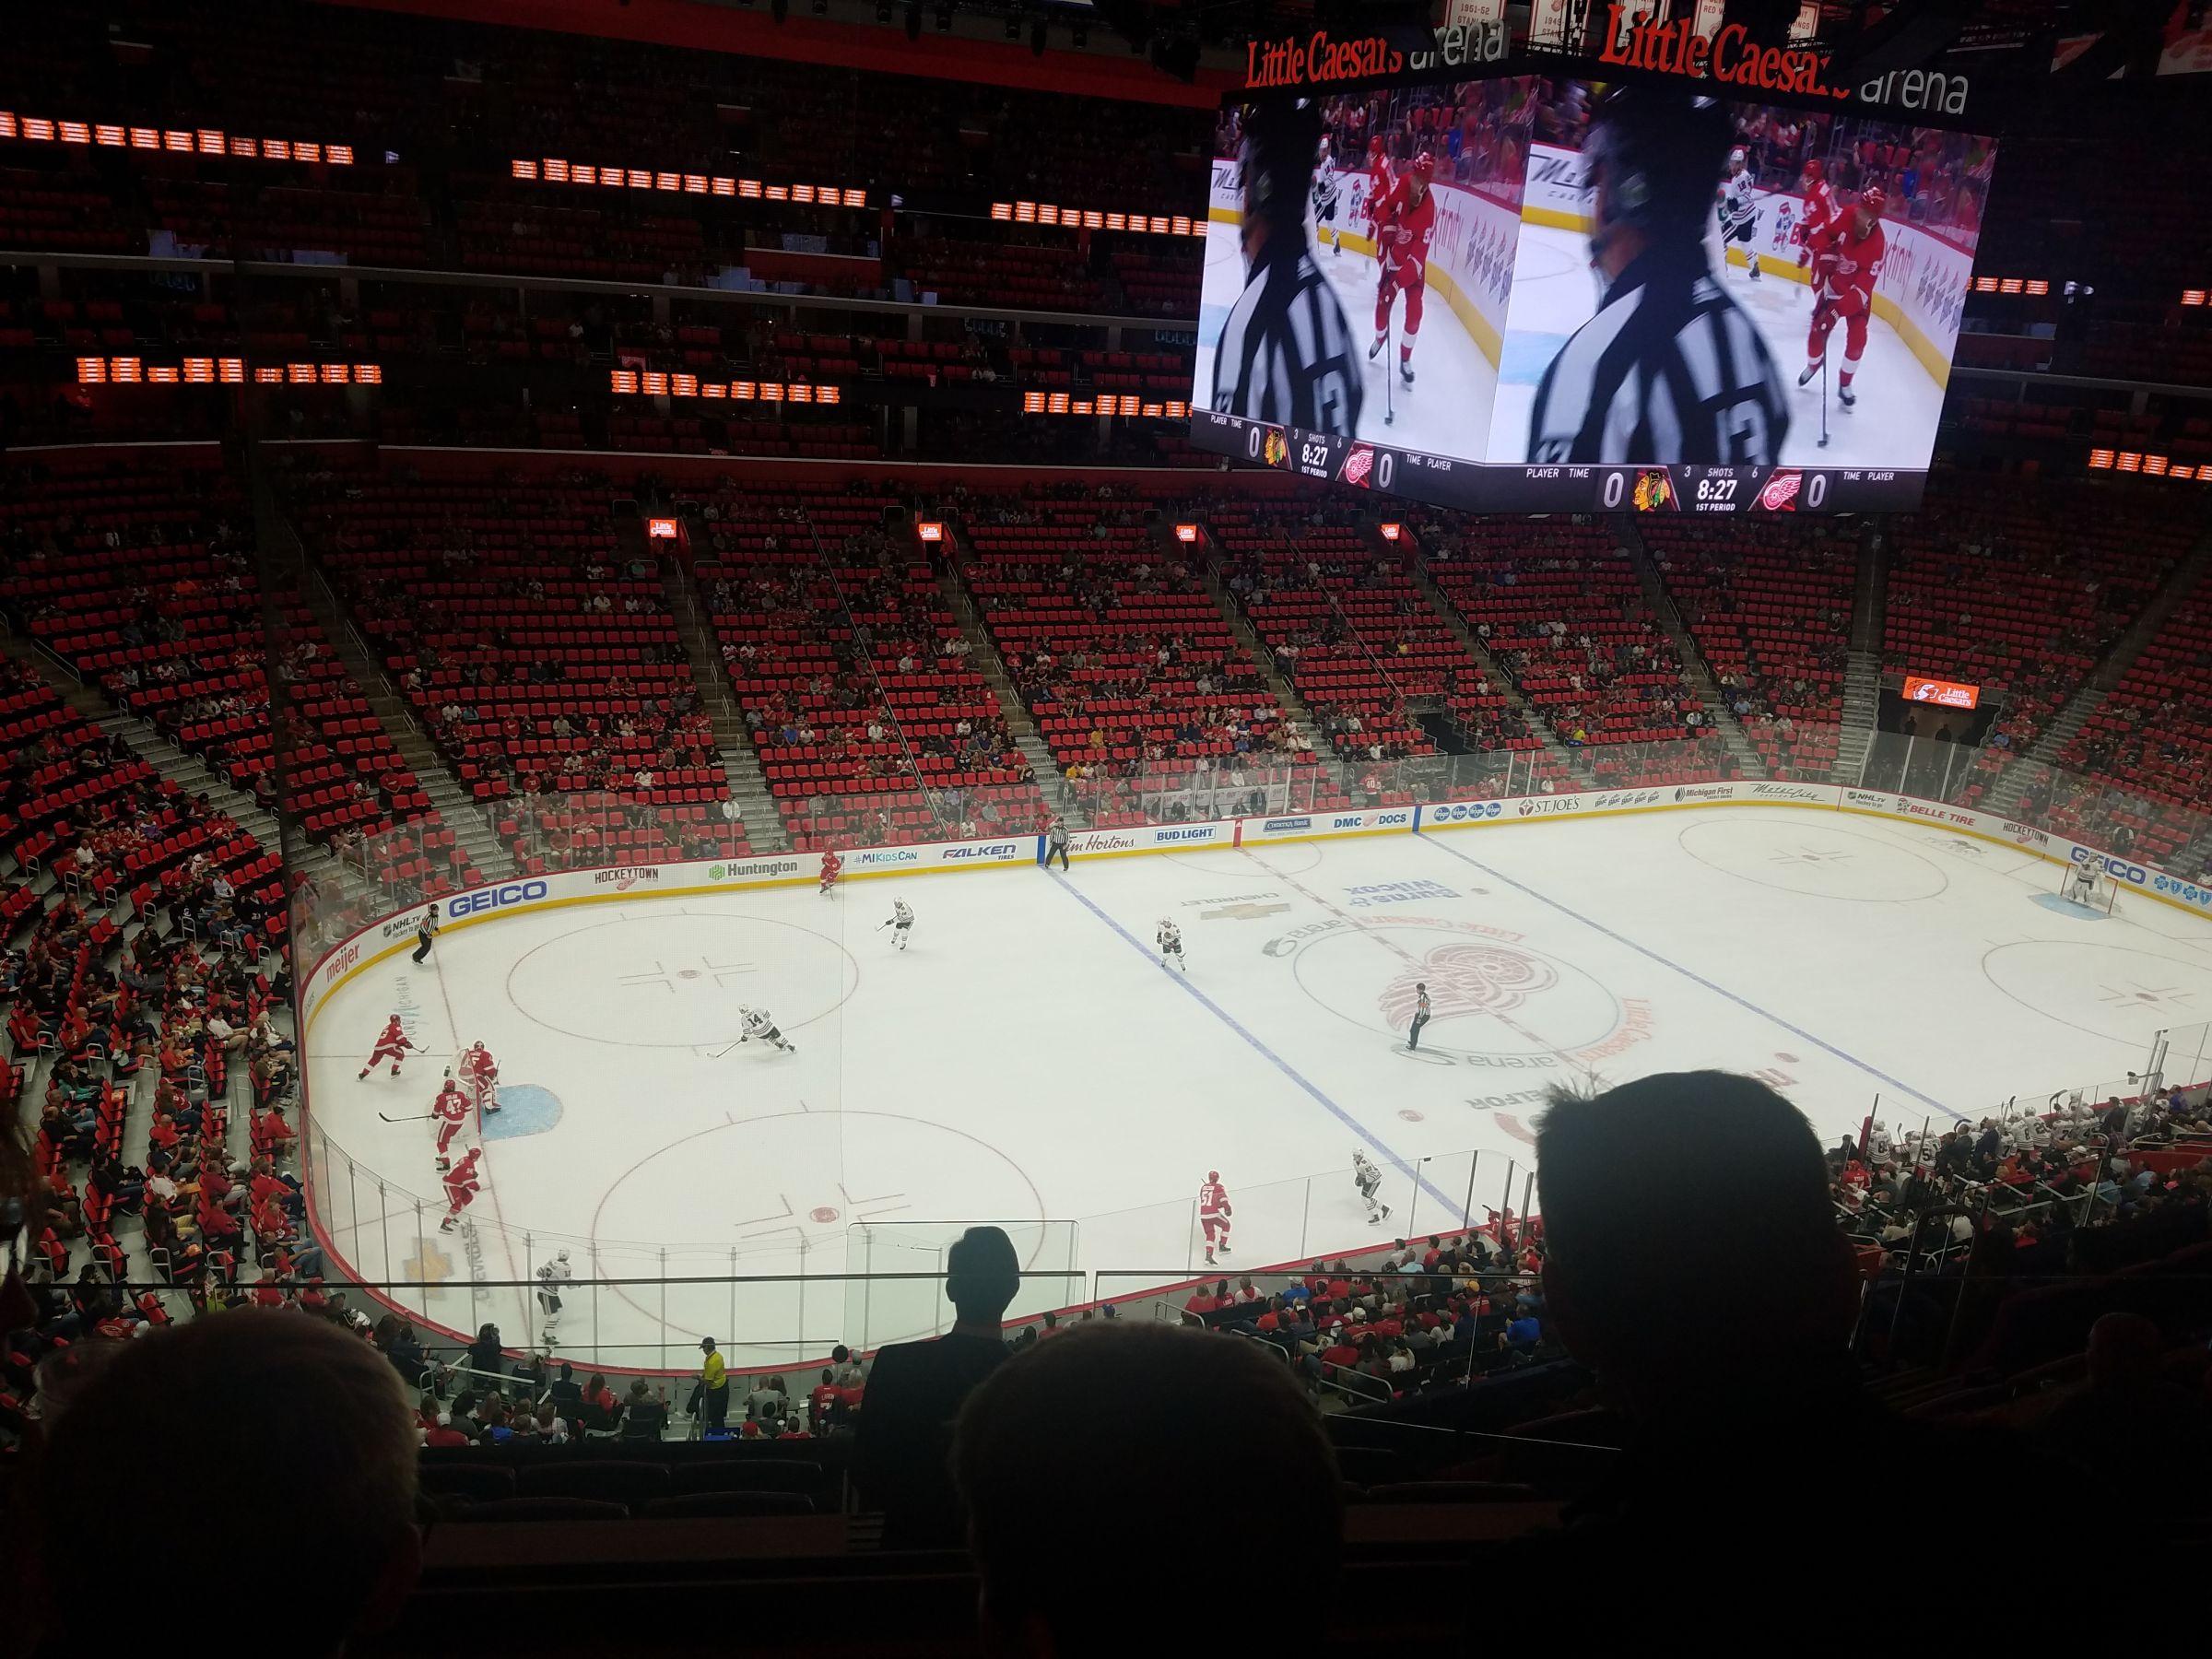 mezzanine 32, row 3 seat view  for hockey - little caesars arena